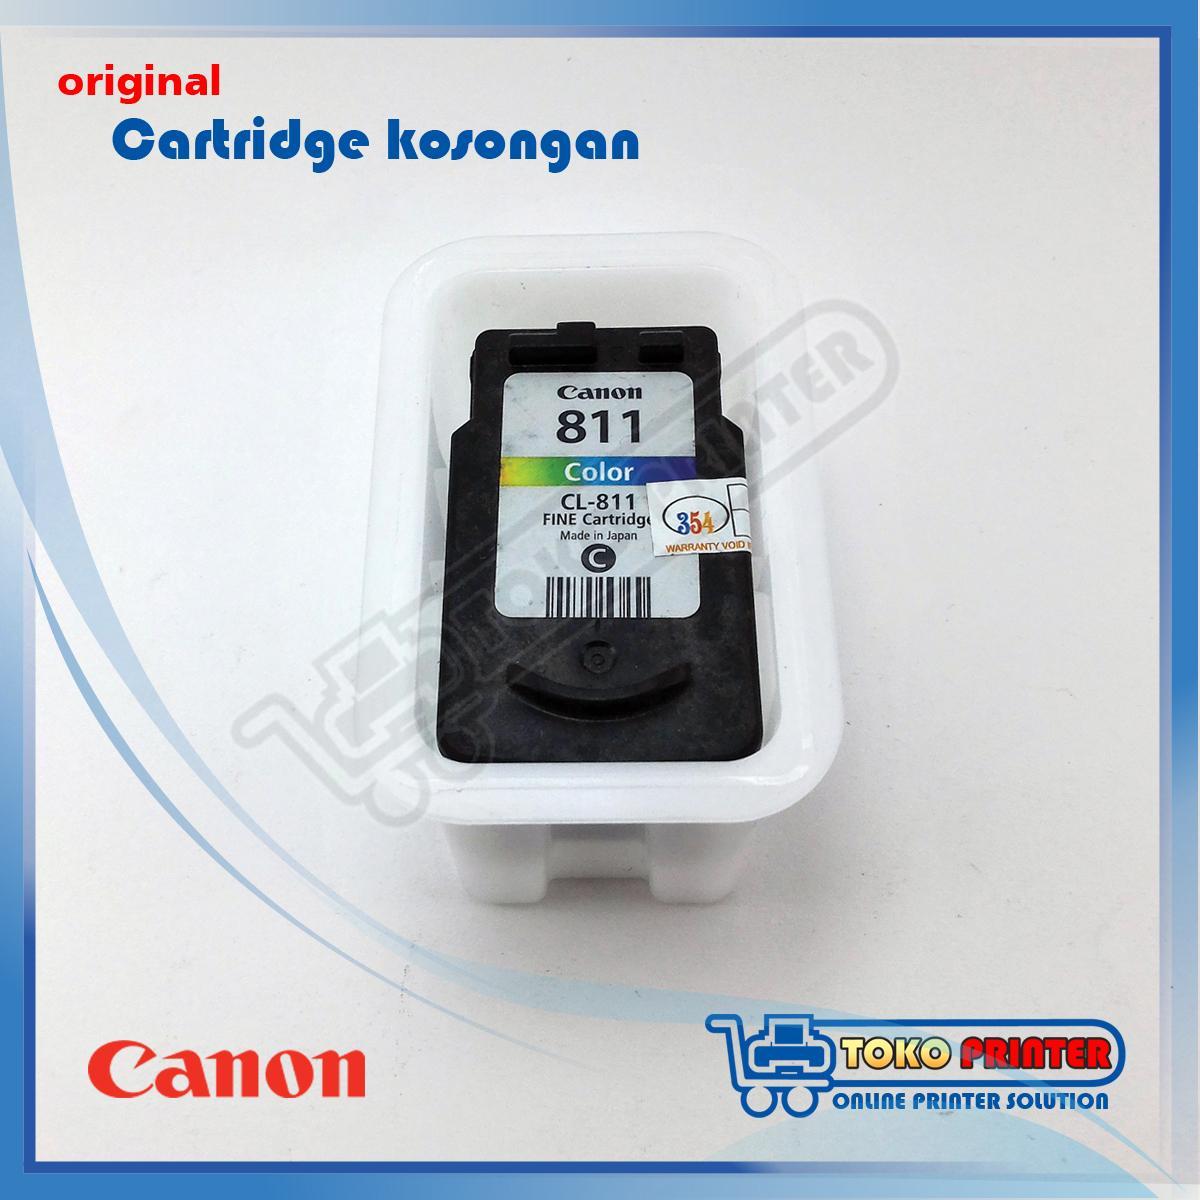 Cartridge Kosongan Canon CL-811